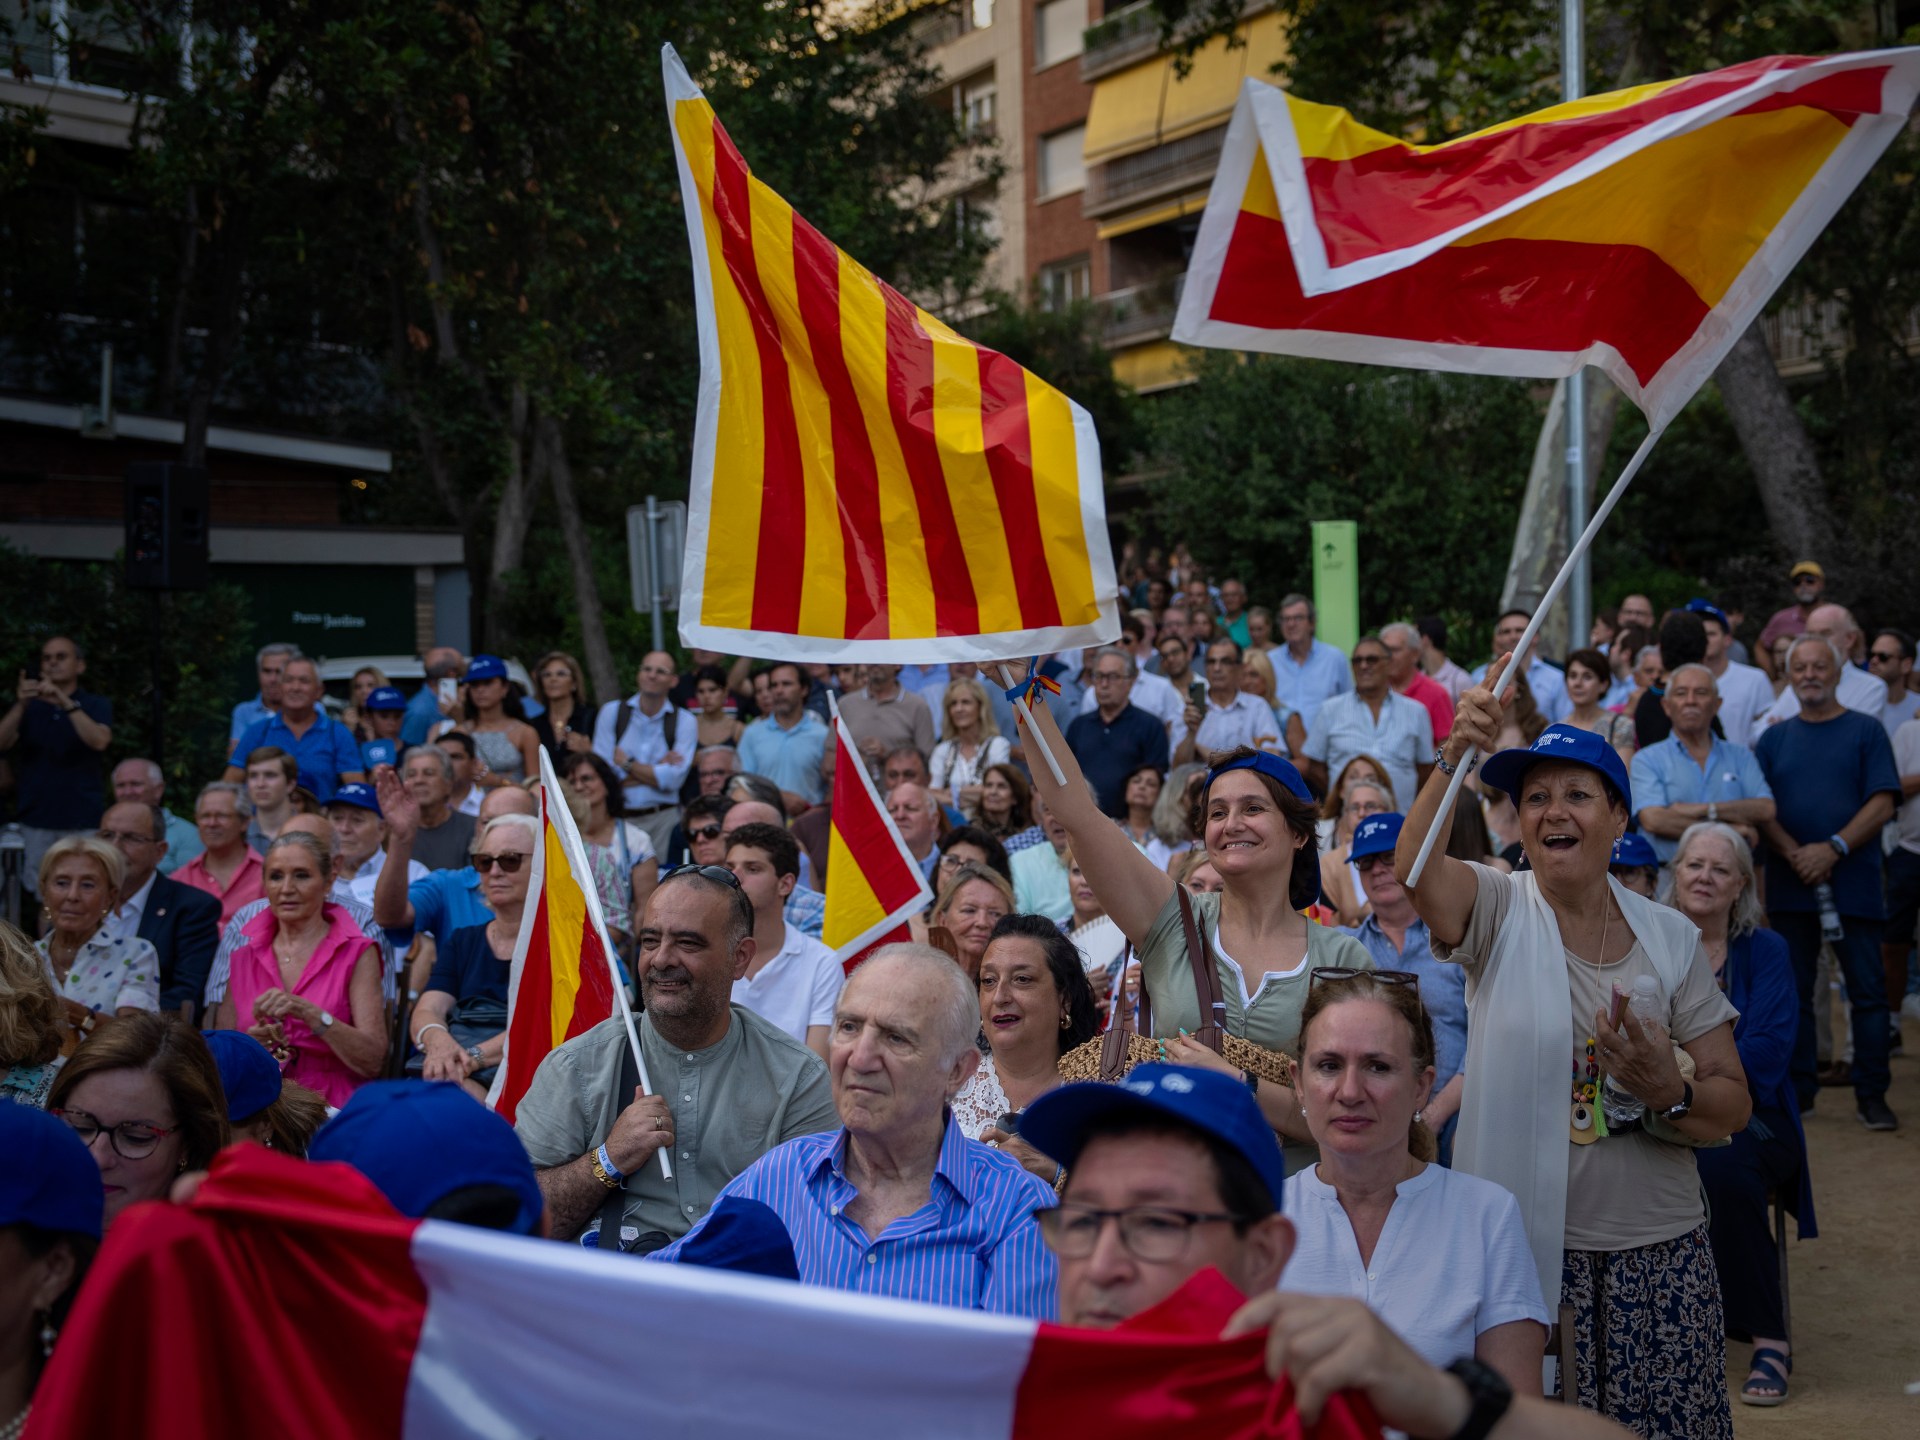 Spanyol sedang menuju ke tempat pemungutan suara sebagai pihak paling kanan yang siap untuk meraih keuntungan |  Berita Pemilu